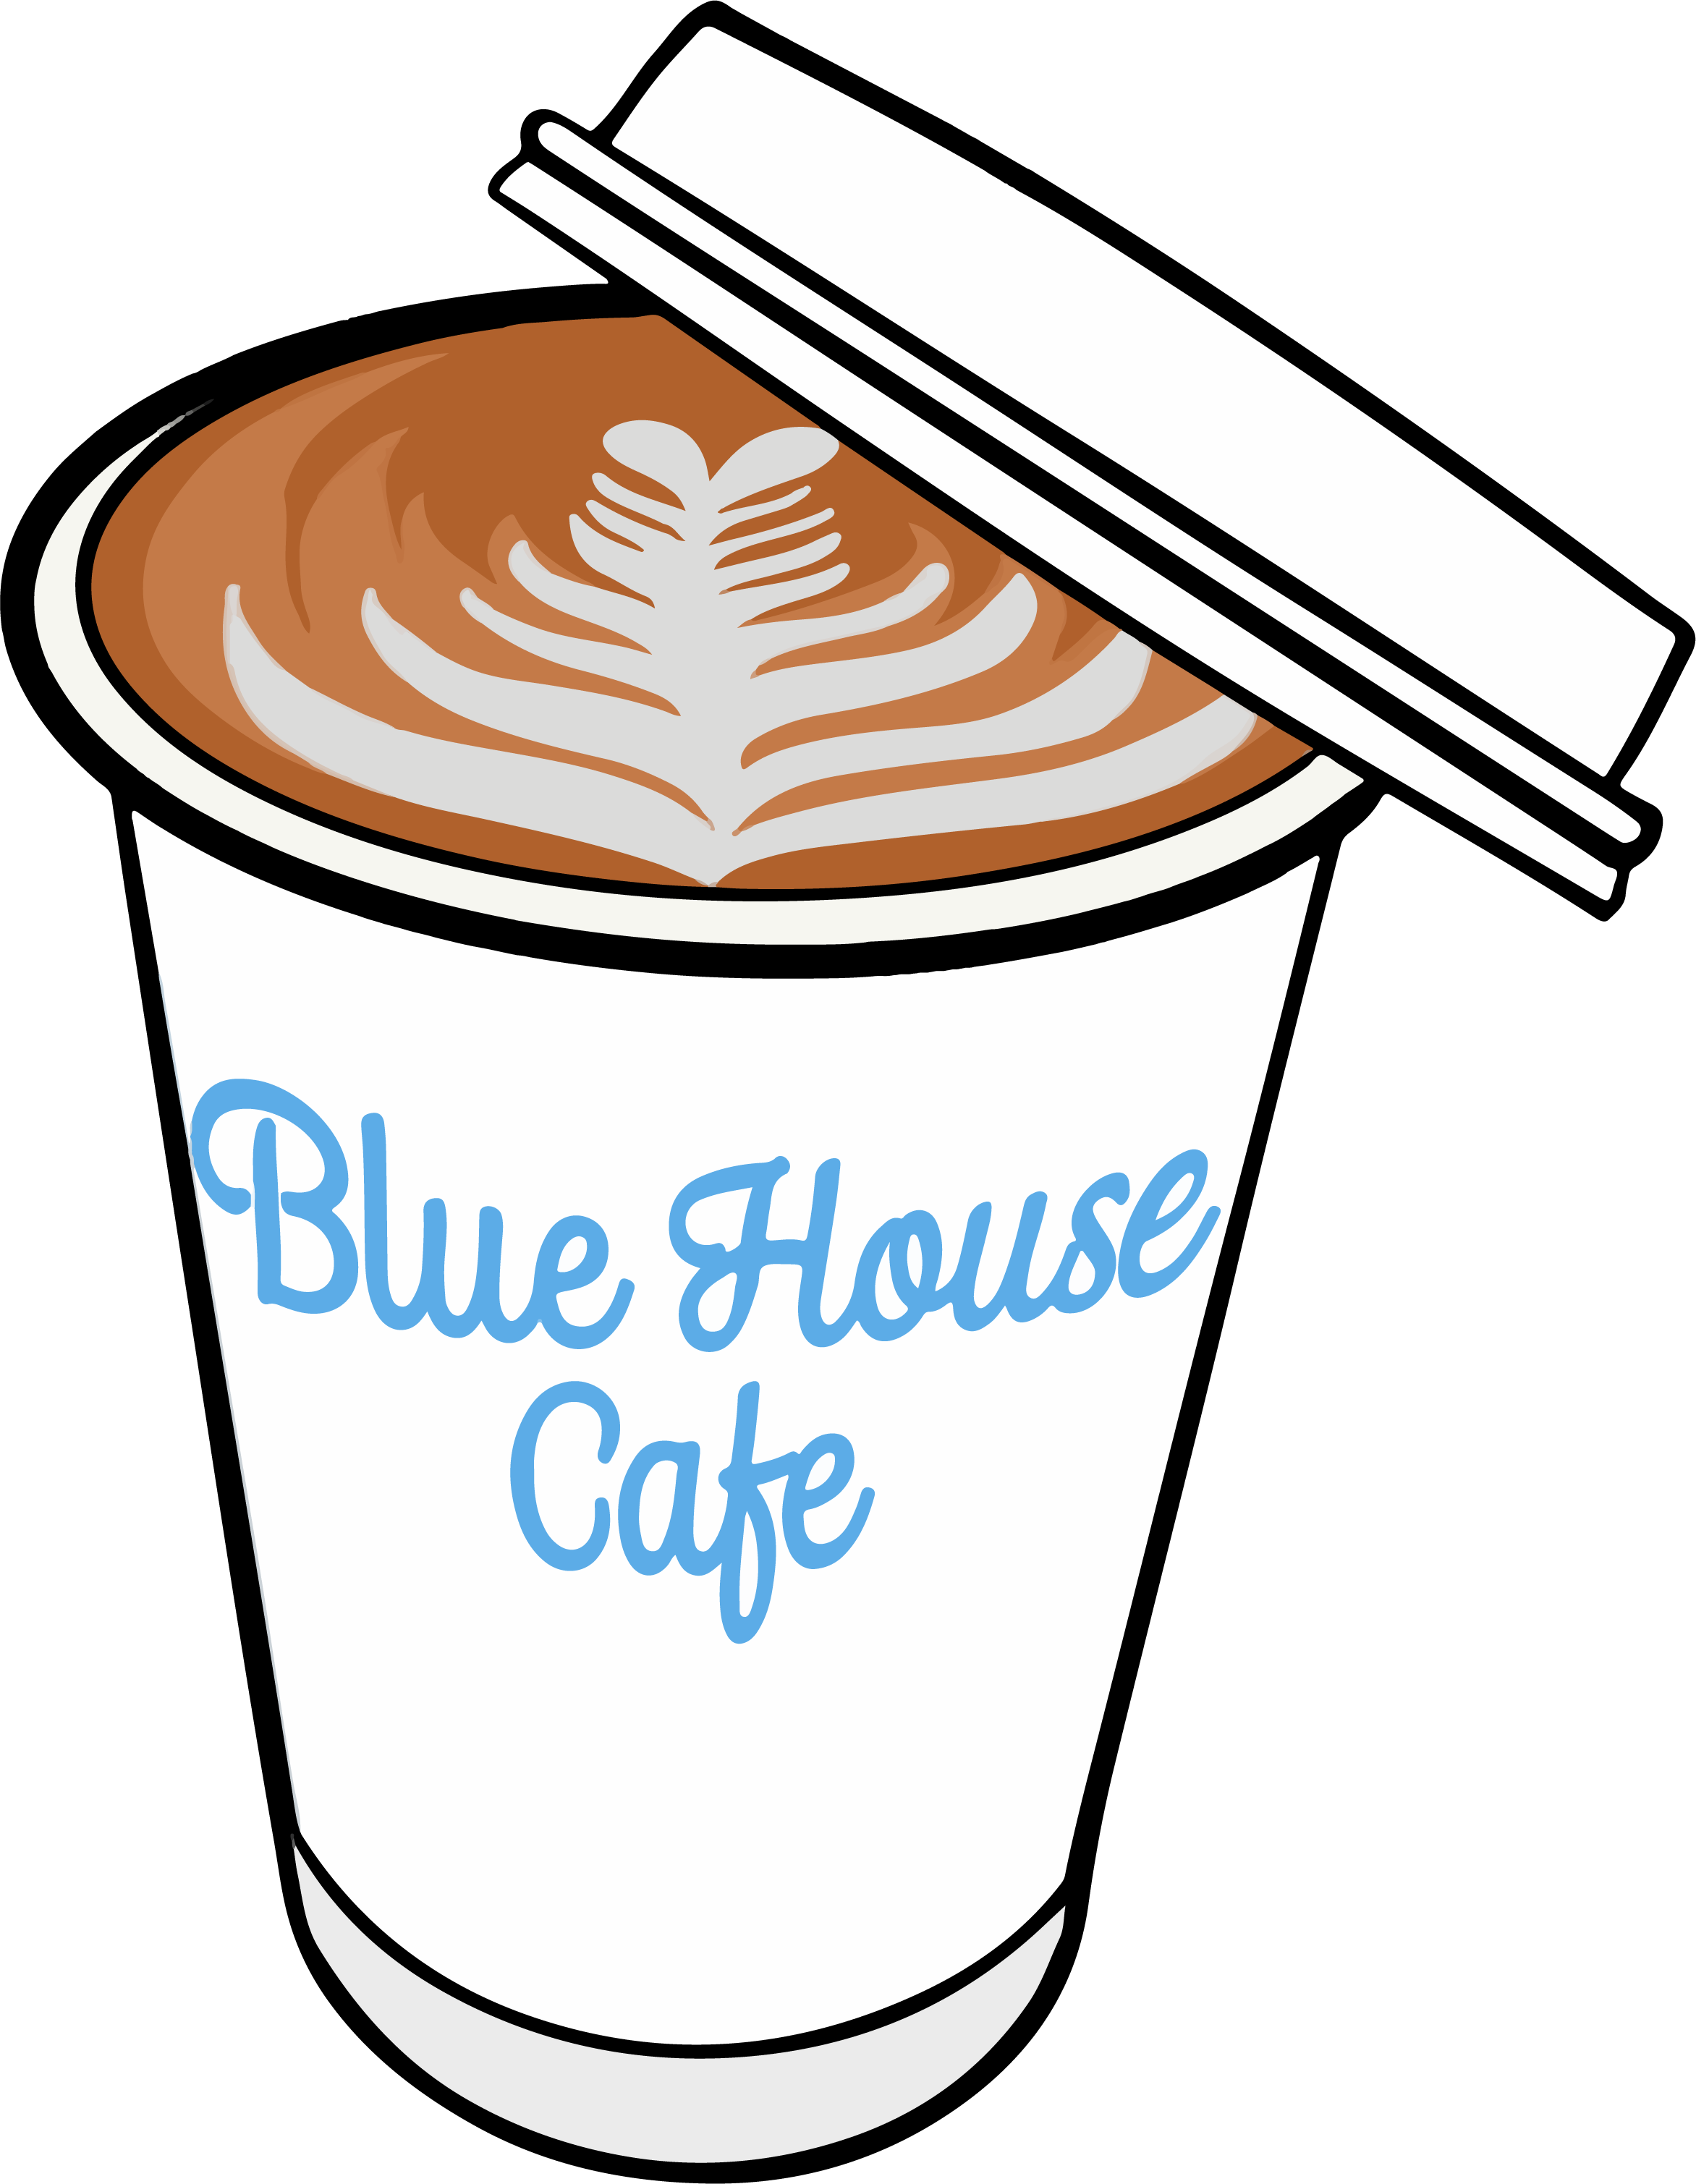 Blue House Cafe